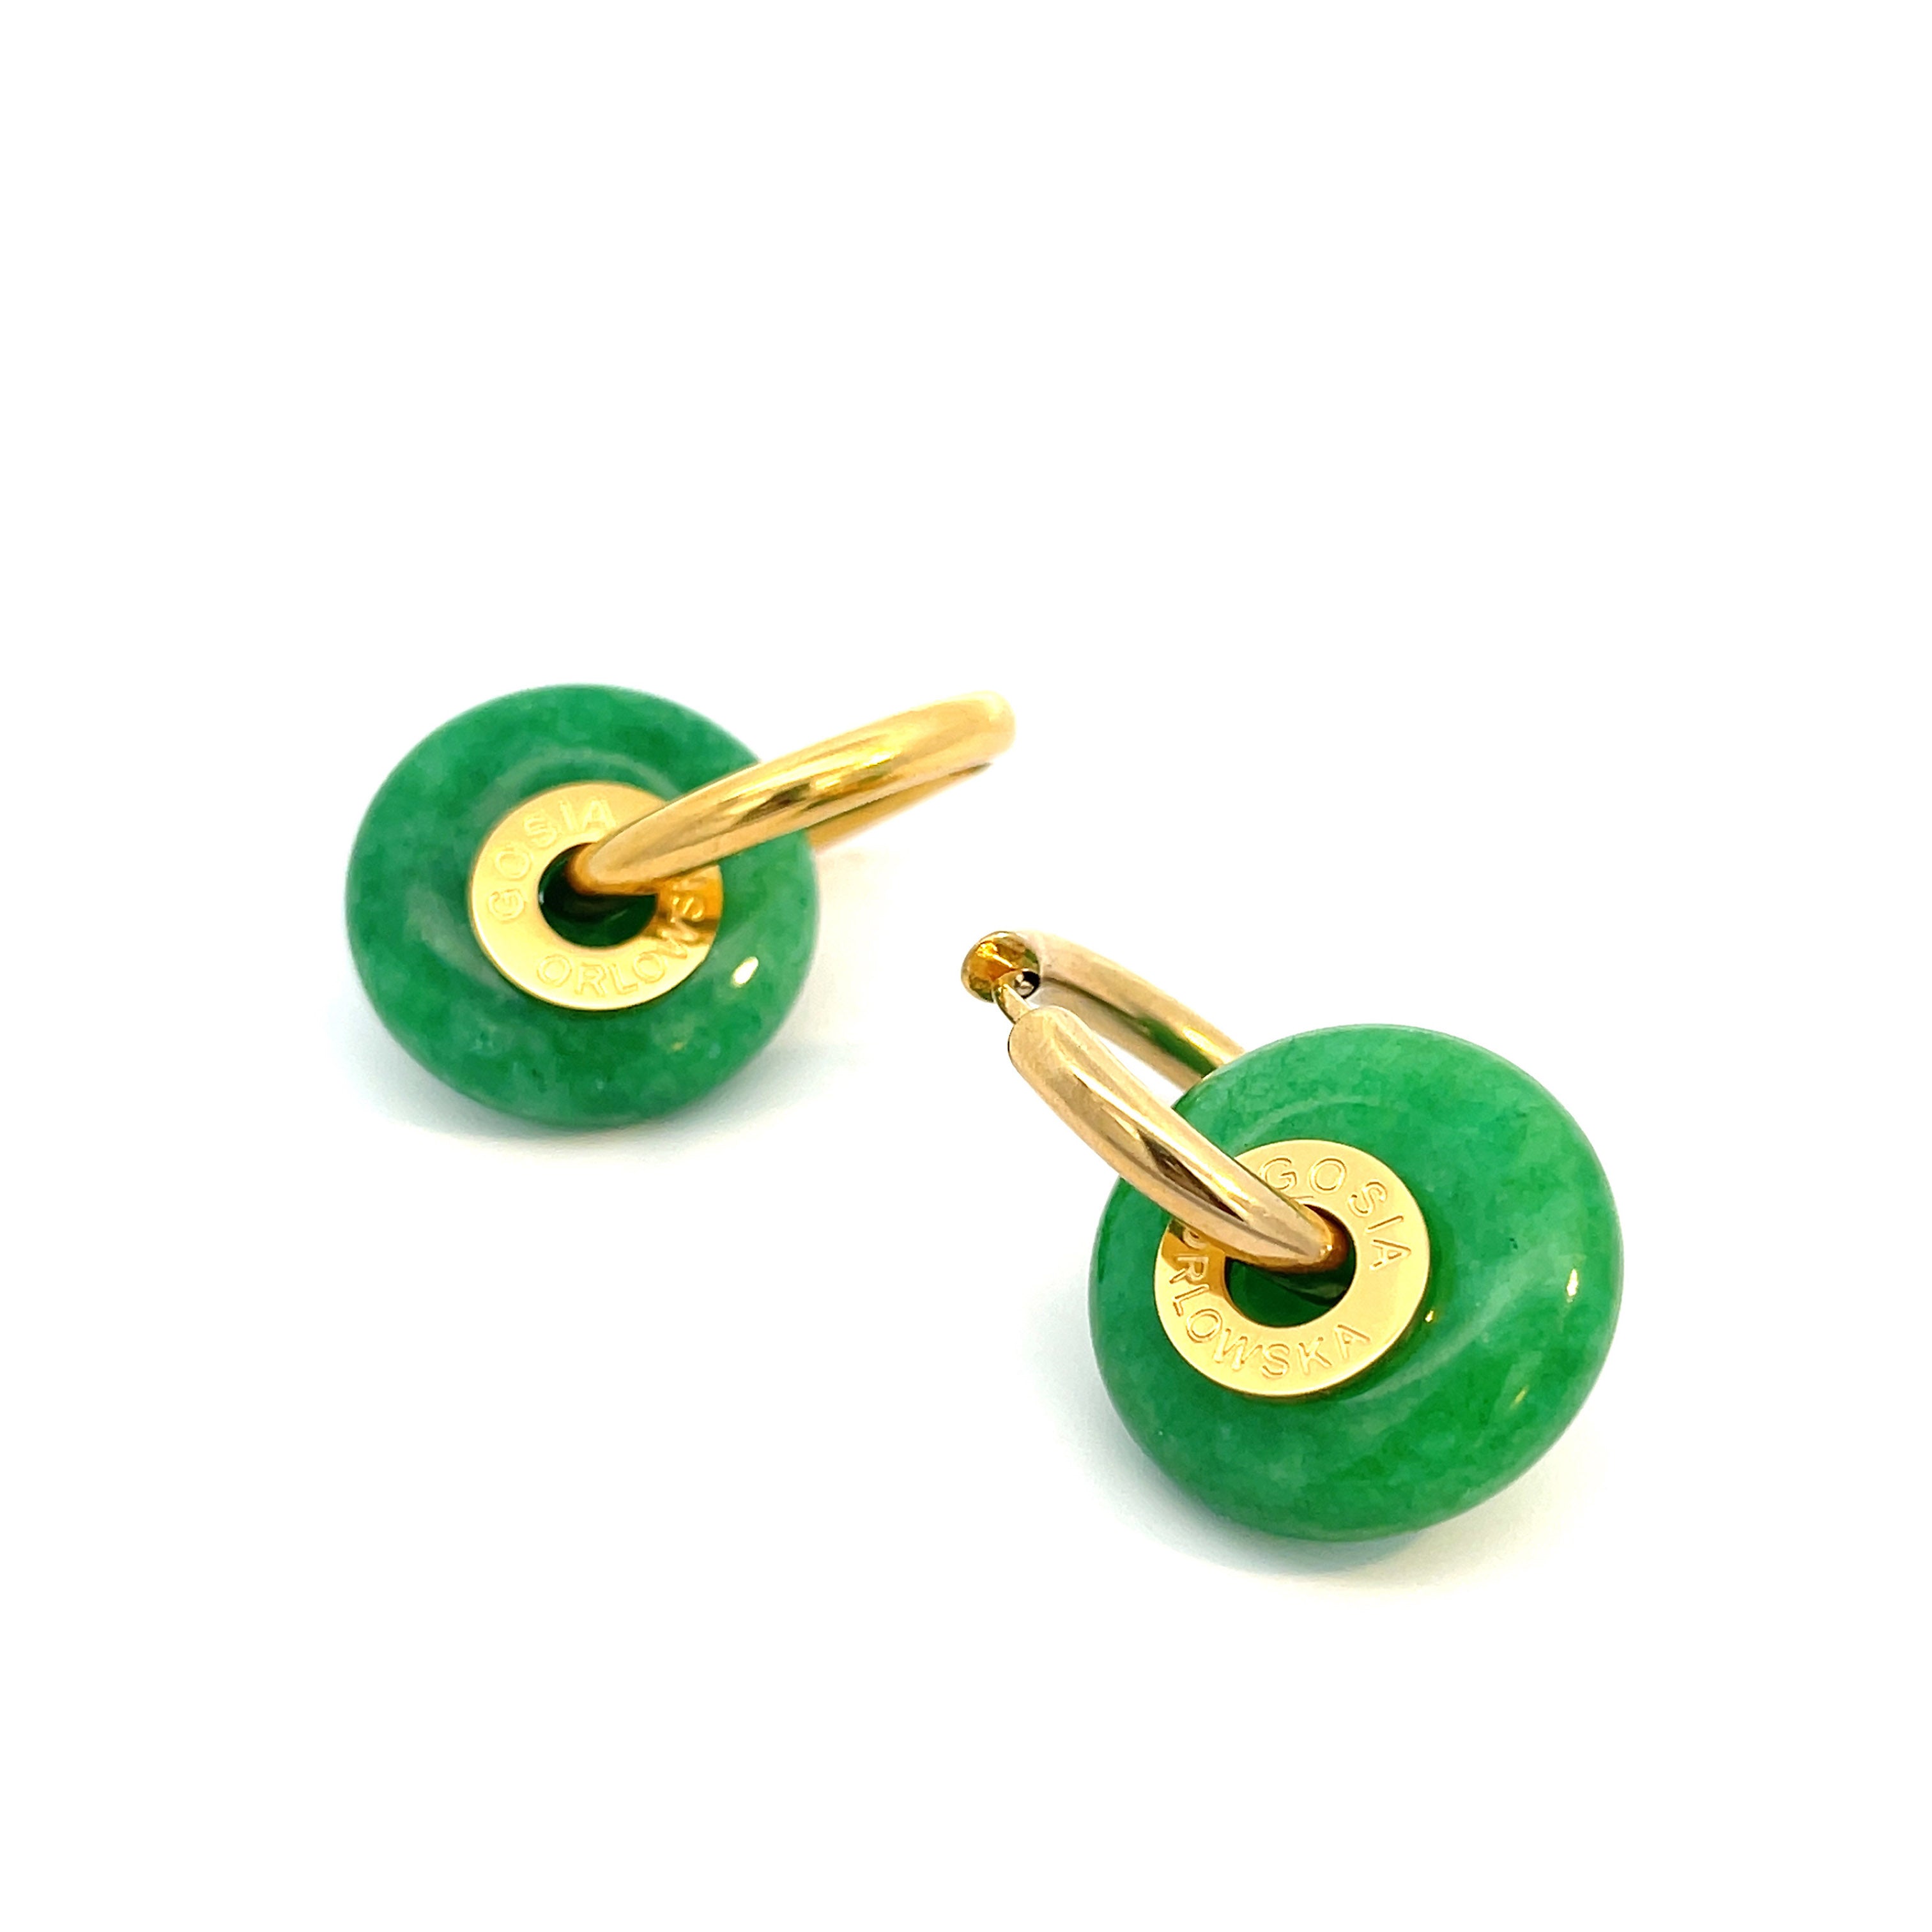 Discover Gosia Orlowska's Green Agate Earrings